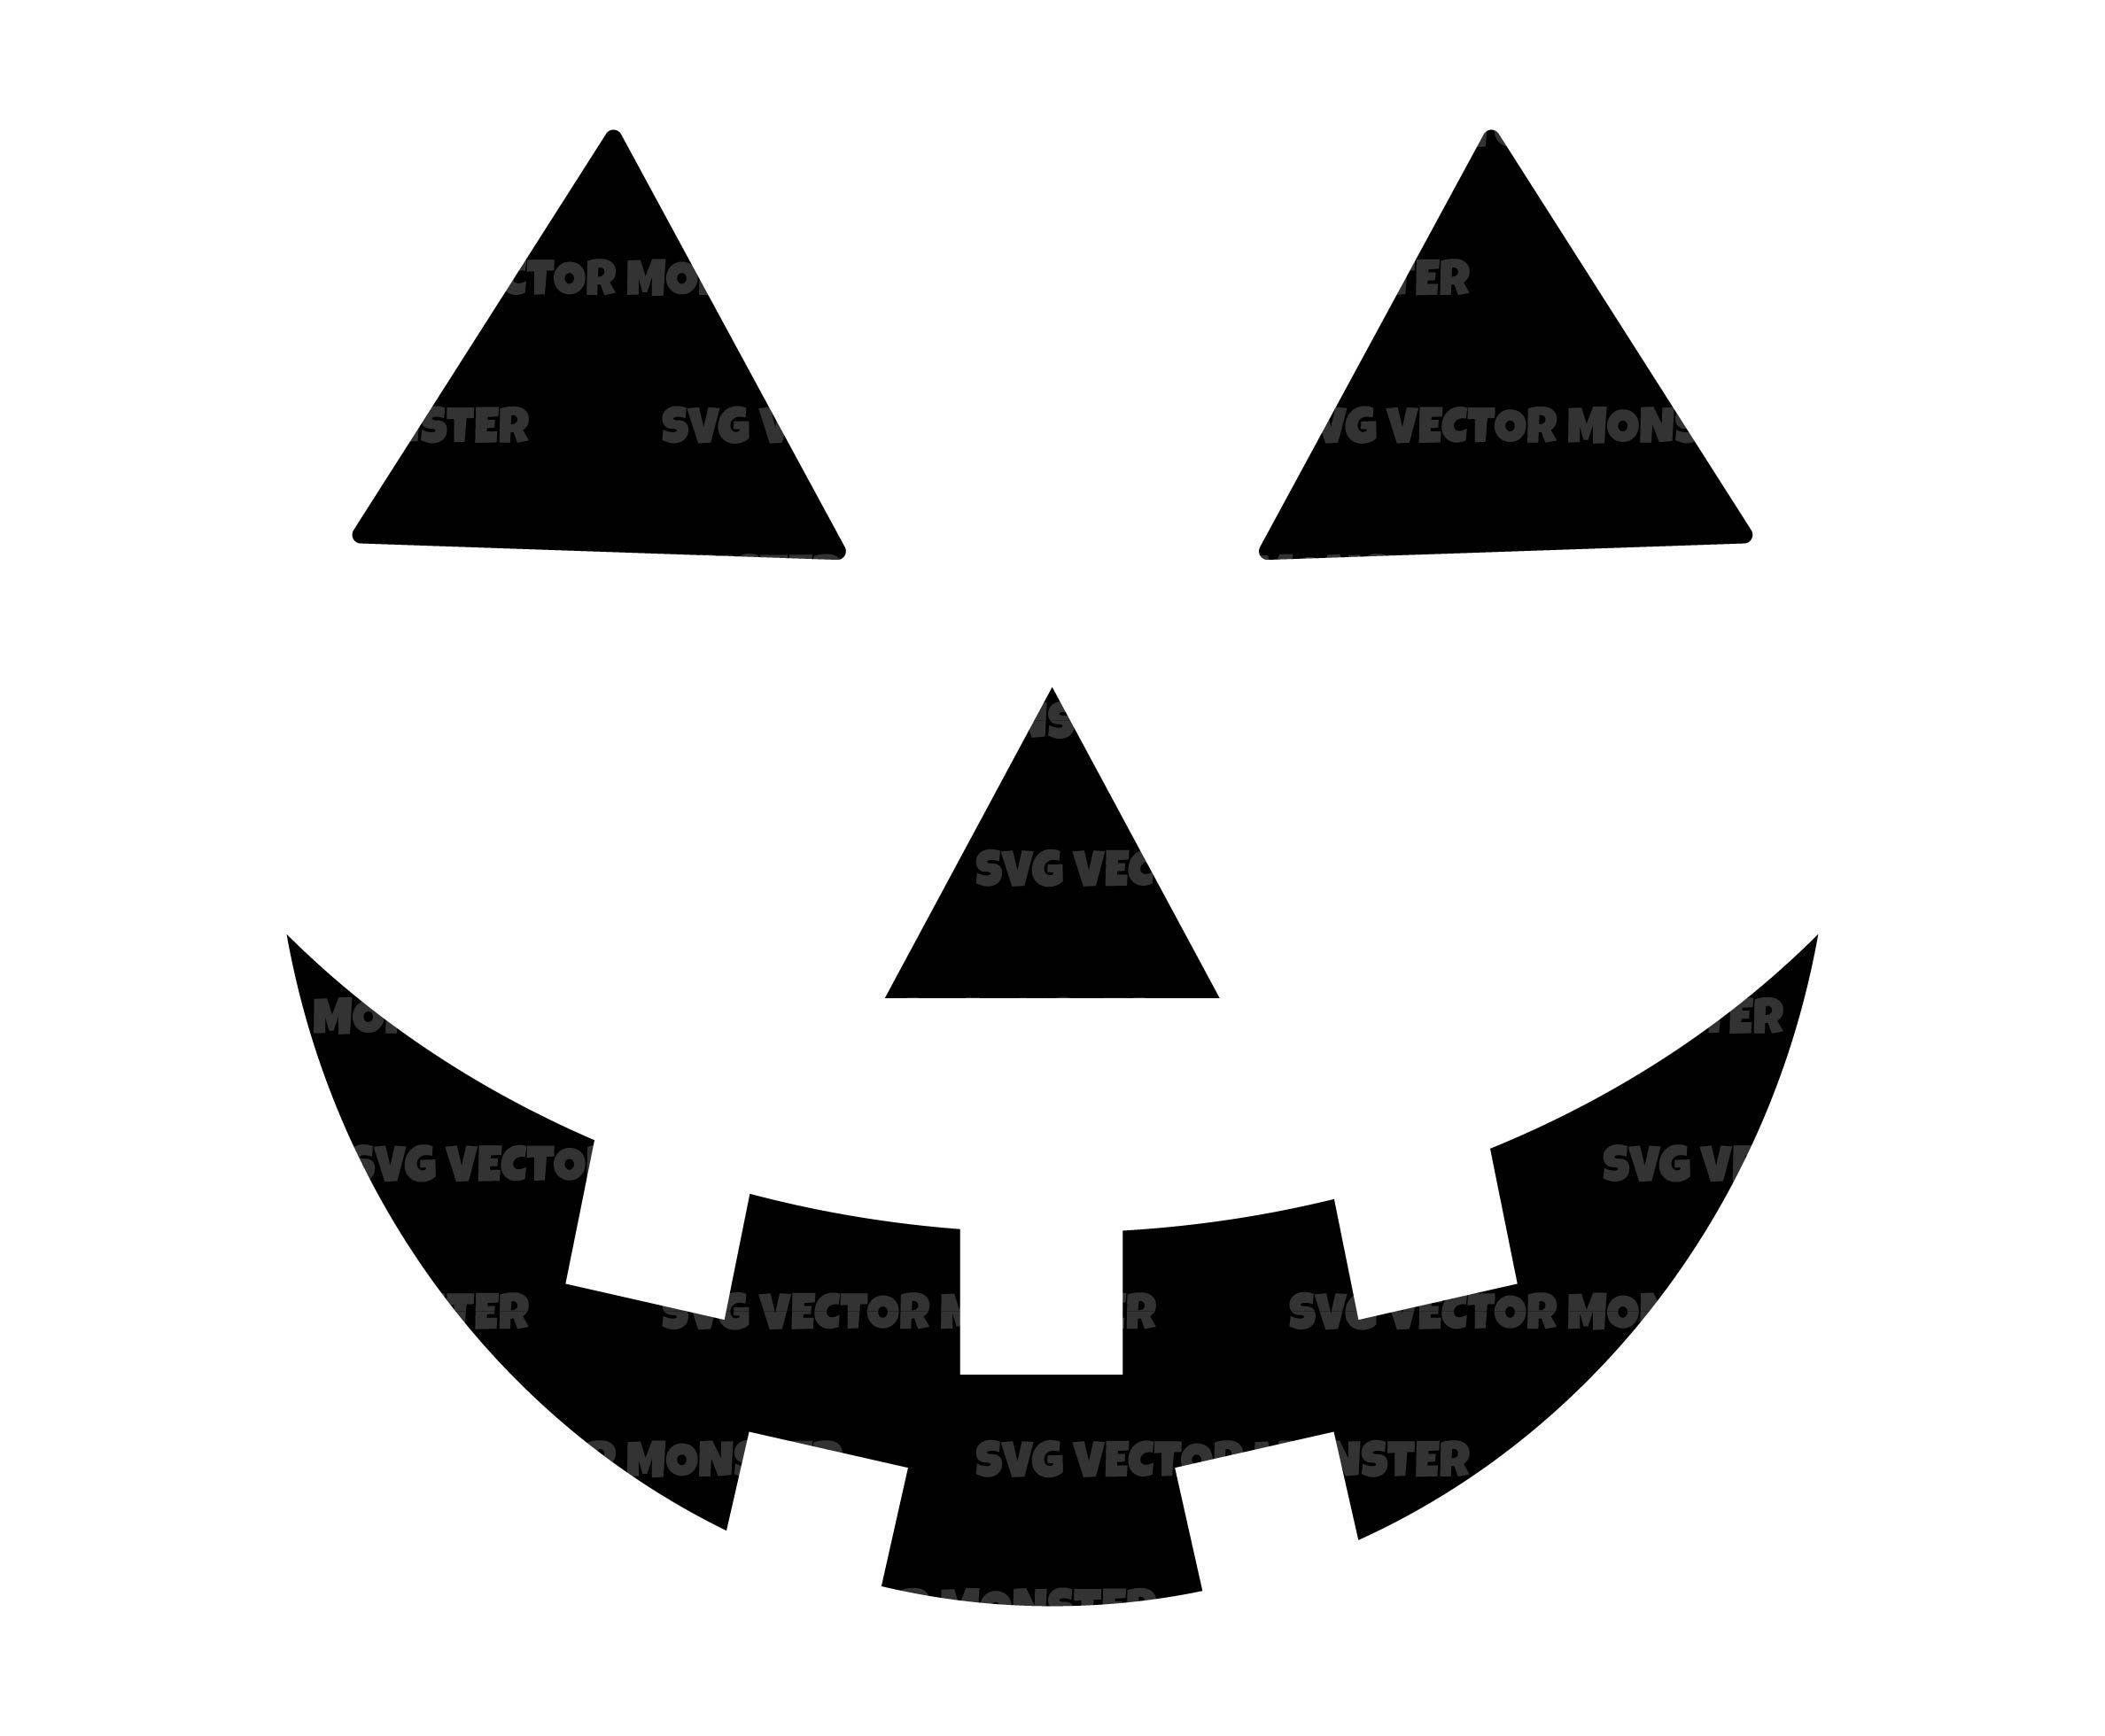 Halloween Pumpkin Face, Ilustração Vetorial Royalty Free SVG, Cliparts,  Vetores, e Ilustrações Stock. Image 190779747